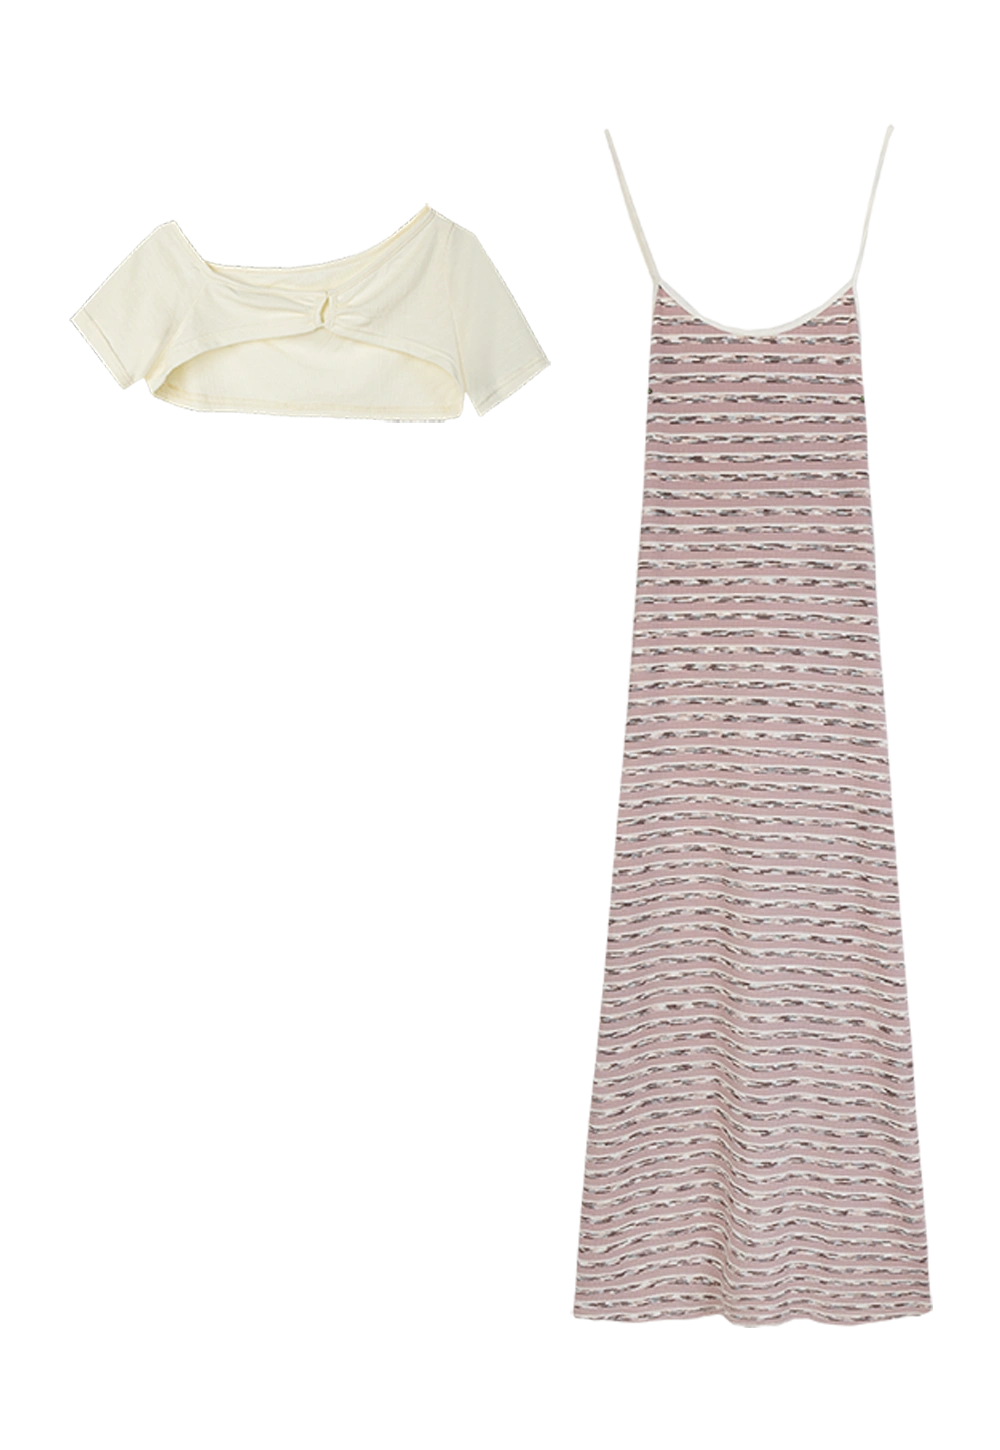 Pakaian Dua Helai Wanita: Atasan Tanaman Putih Putih dan Pakaian Maxi Berjalur Hitam & Putih - Pakaian Kasual Musim Panas